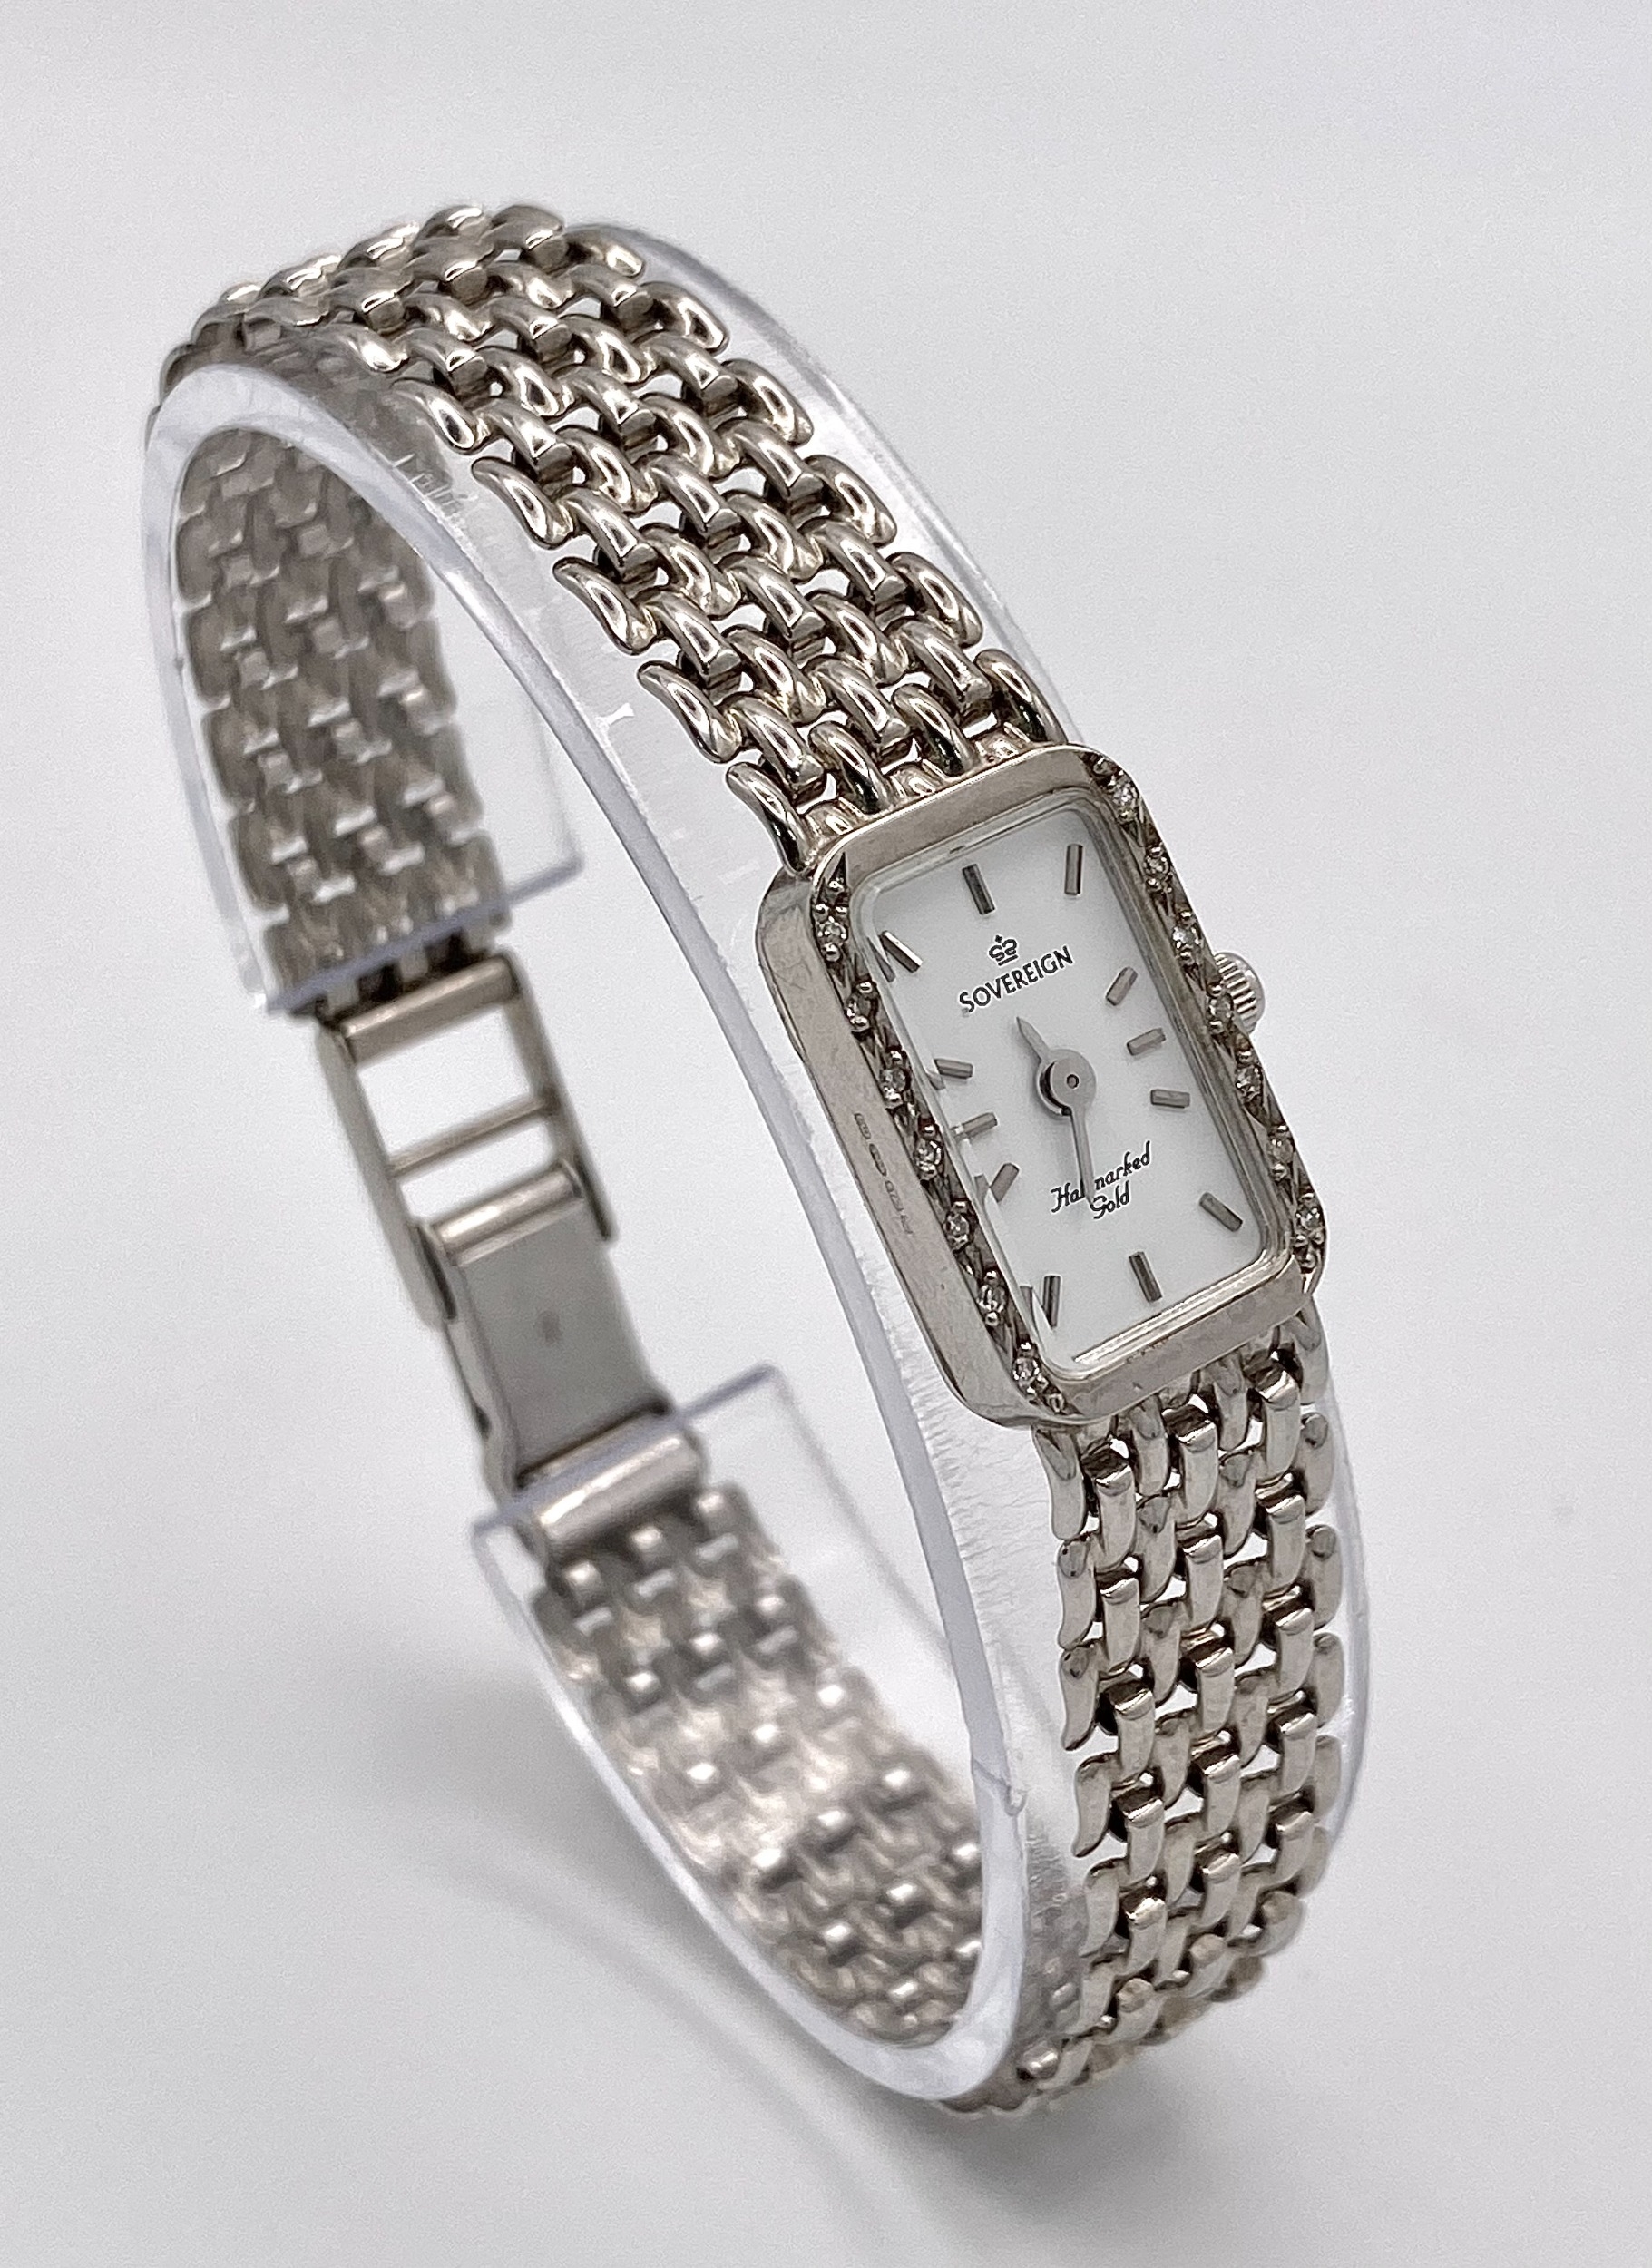 A 9K White Gold Sovereign Quartz Watch. 9K gold bracelet and case - 13mm. White dial. Diamond bezel. - Image 3 of 6